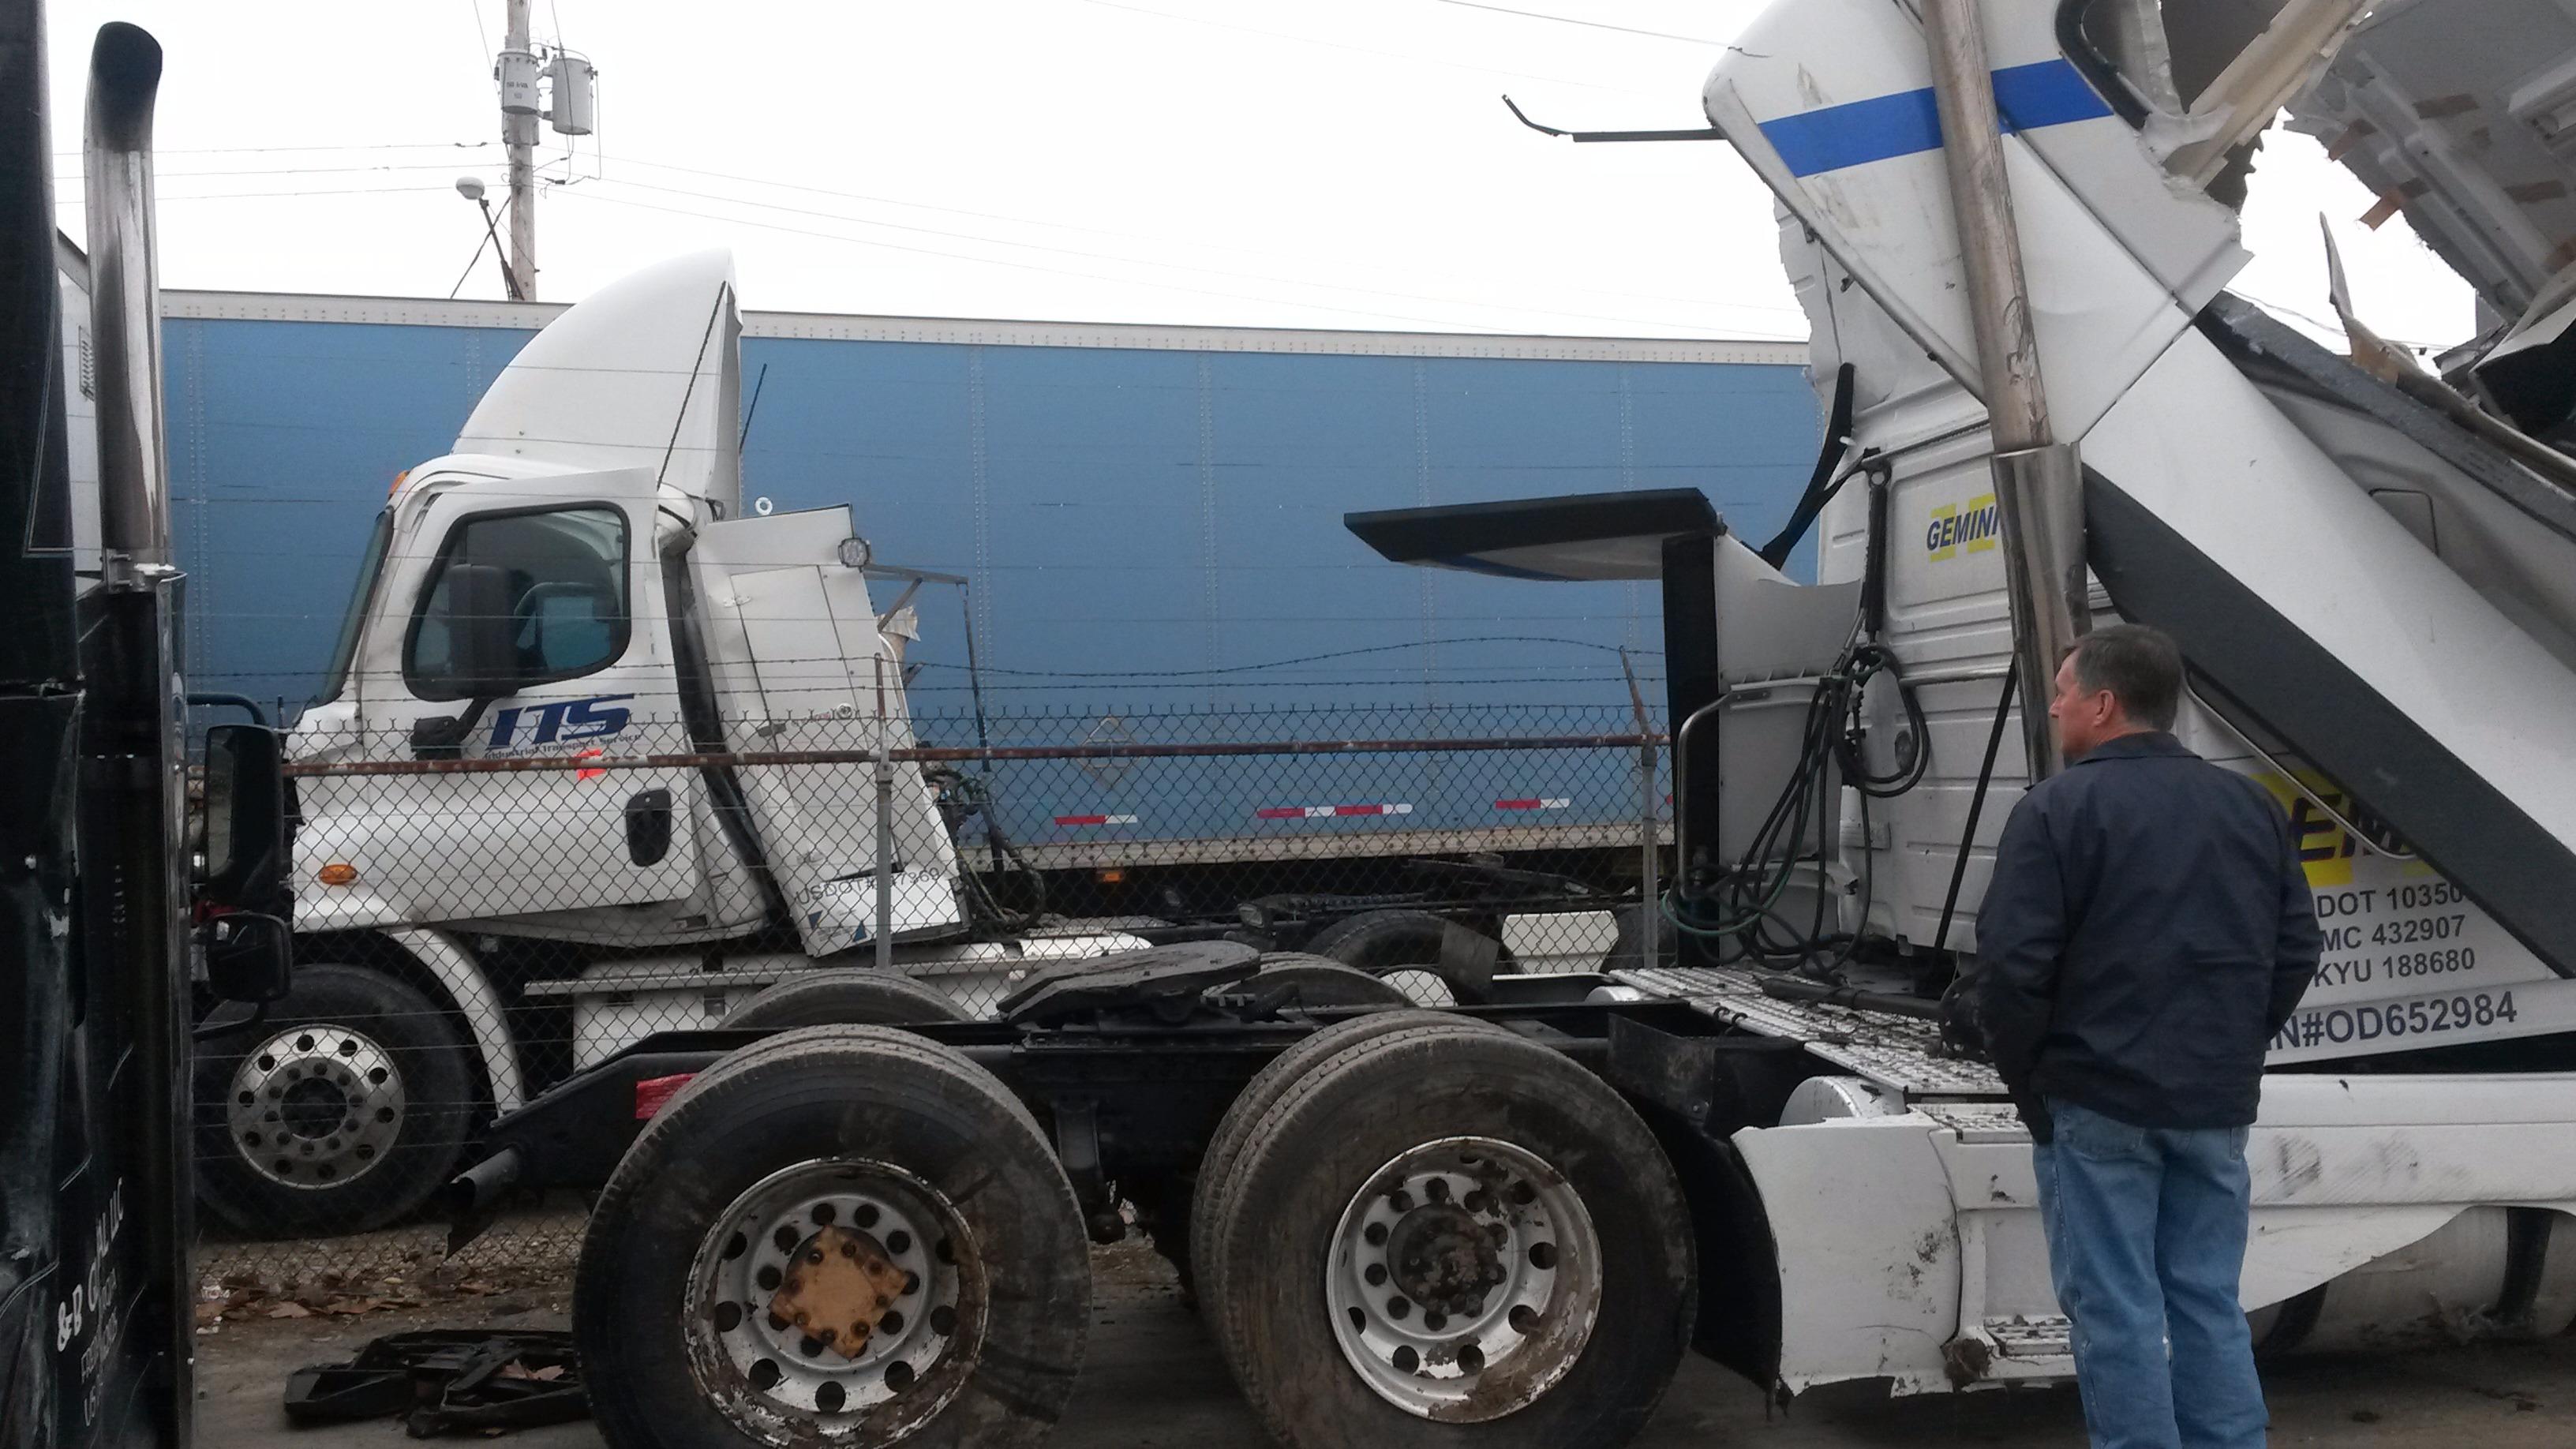 Fox Truck & Trailer Repair Inc. Dayton (937)382-6544